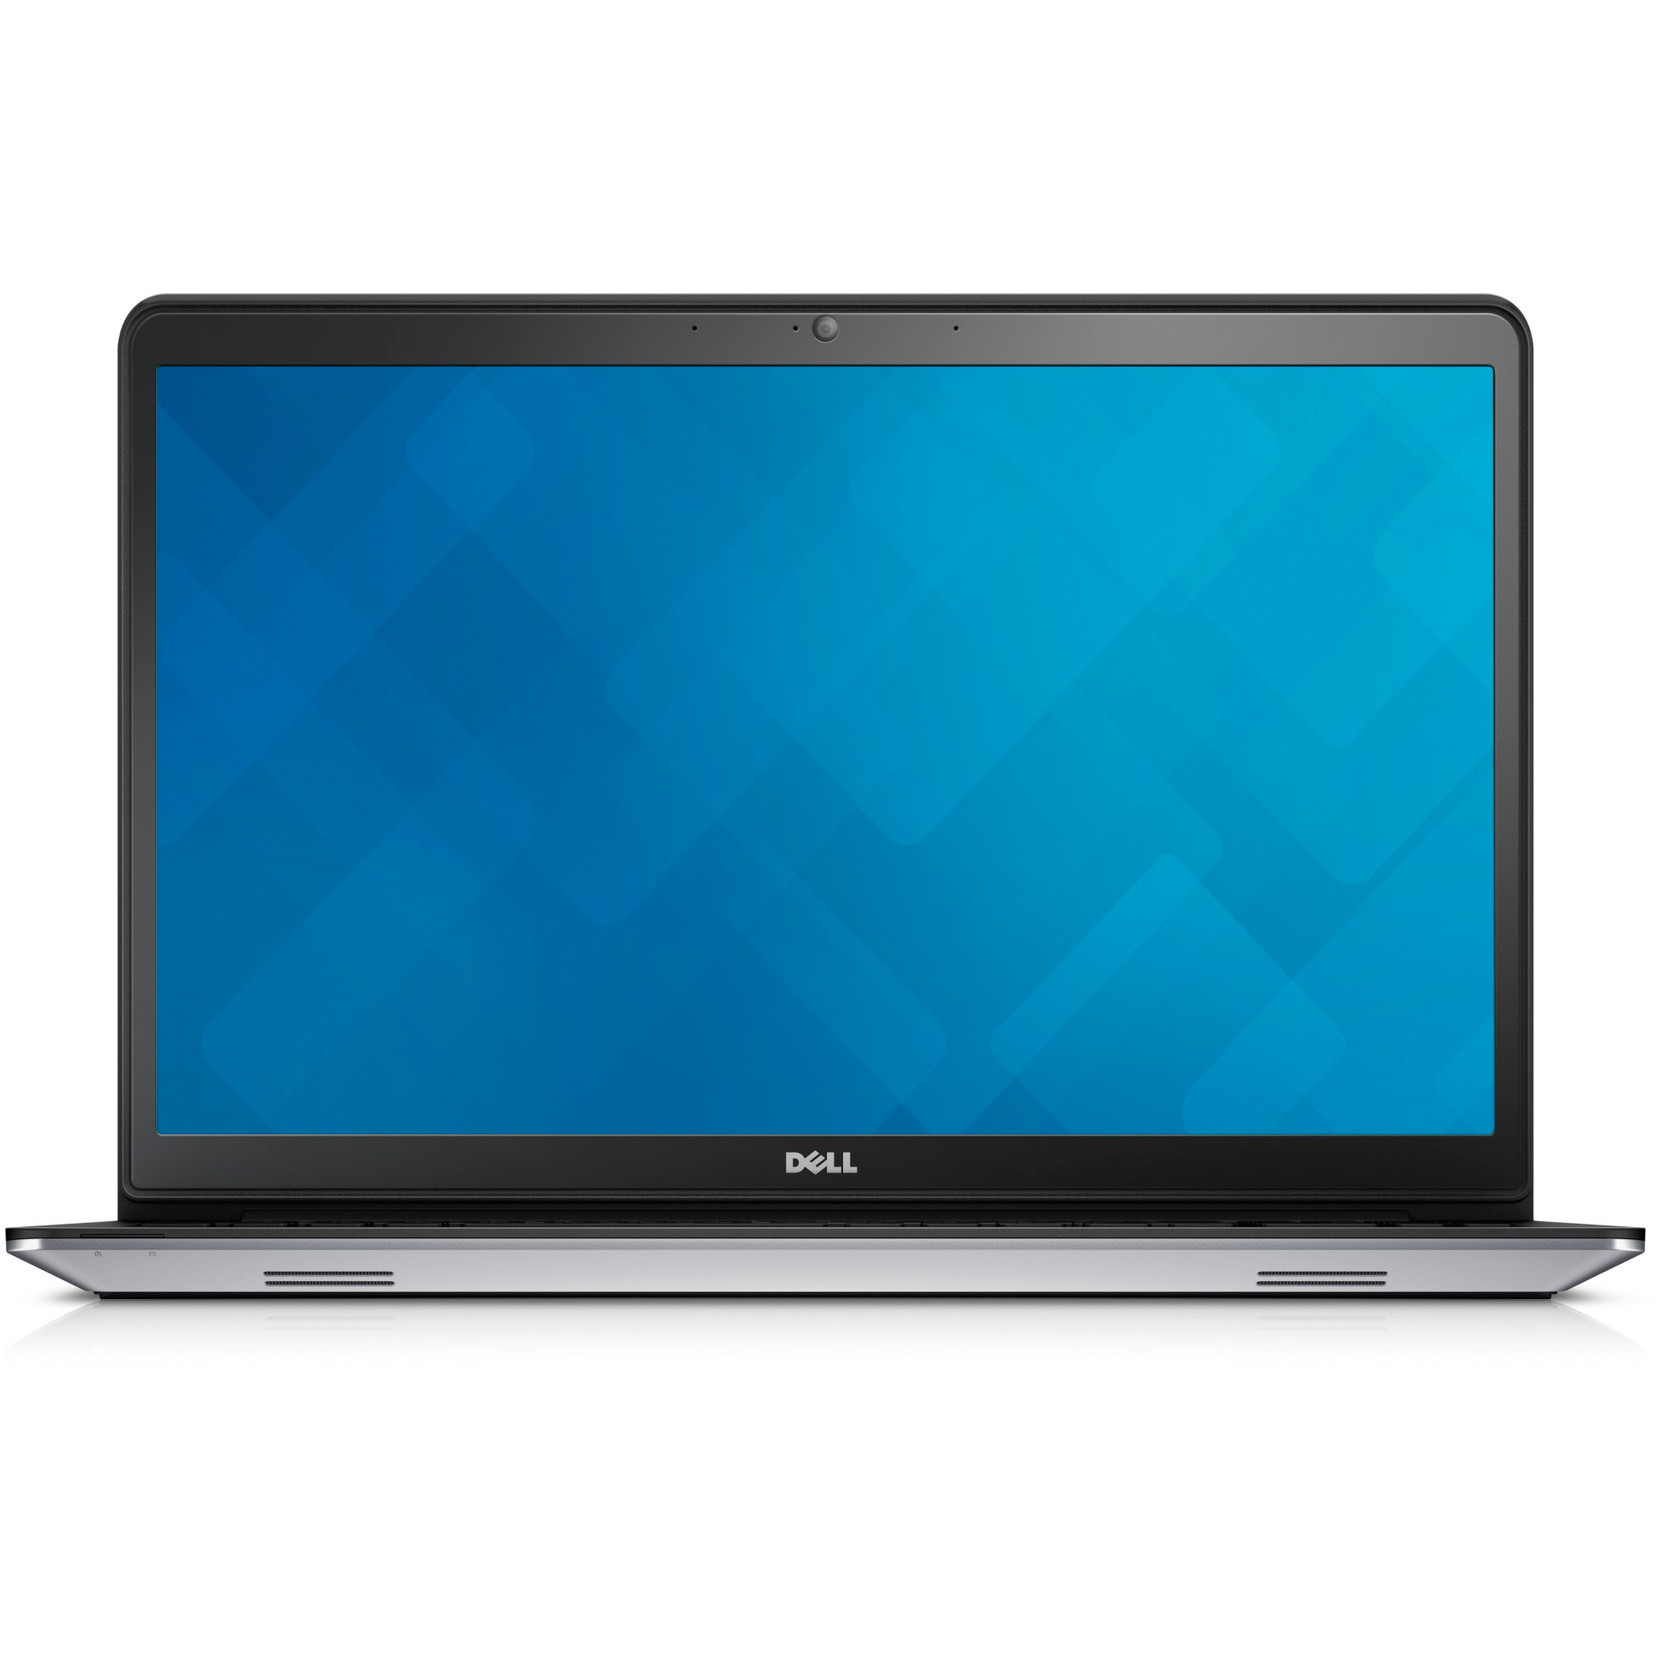  Laptop Dell Inspiron 5548, Intel Core i5-5200U, 4GB DDR3, HDD 500GB, Intel HD Graphics, Ubuntu 